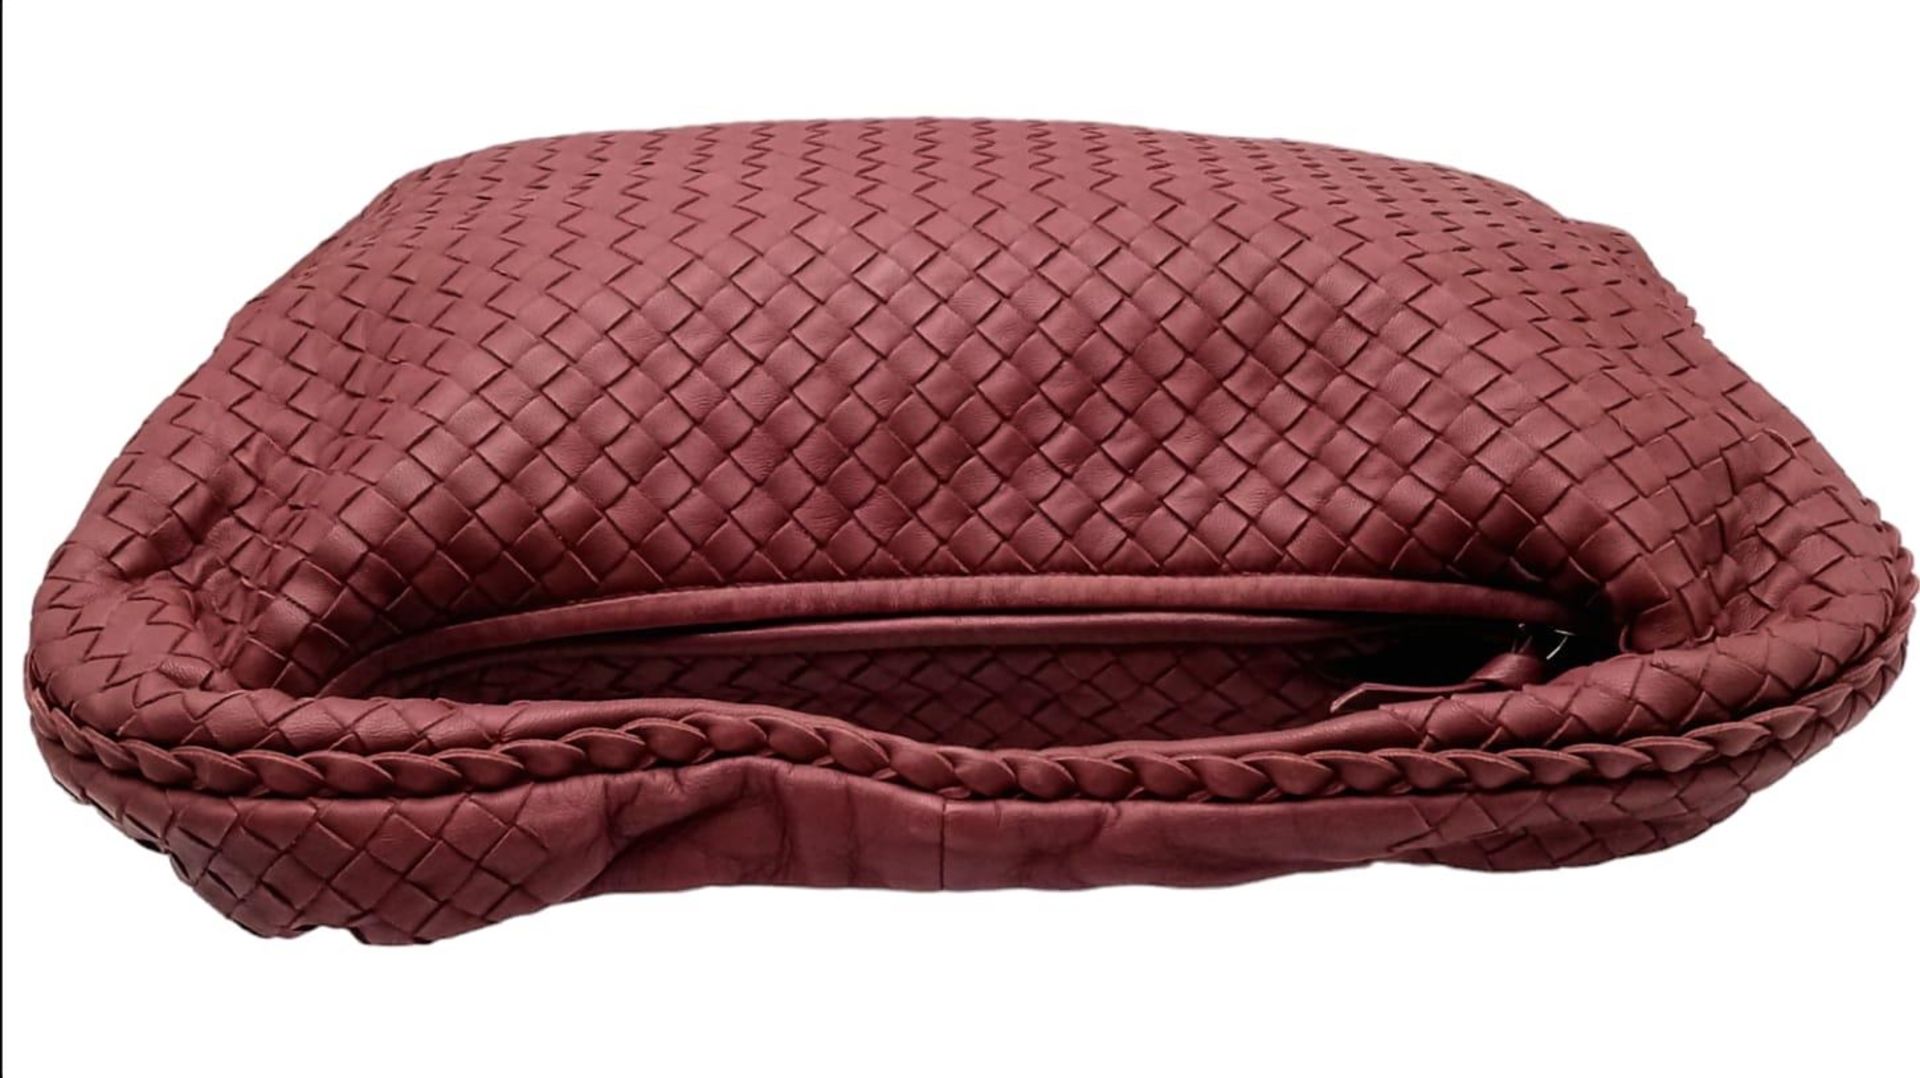 A Bottega Veneta large Hobo bag, soft red nappa leather, beige interior, gold tone top zipper. - Image 6 of 10